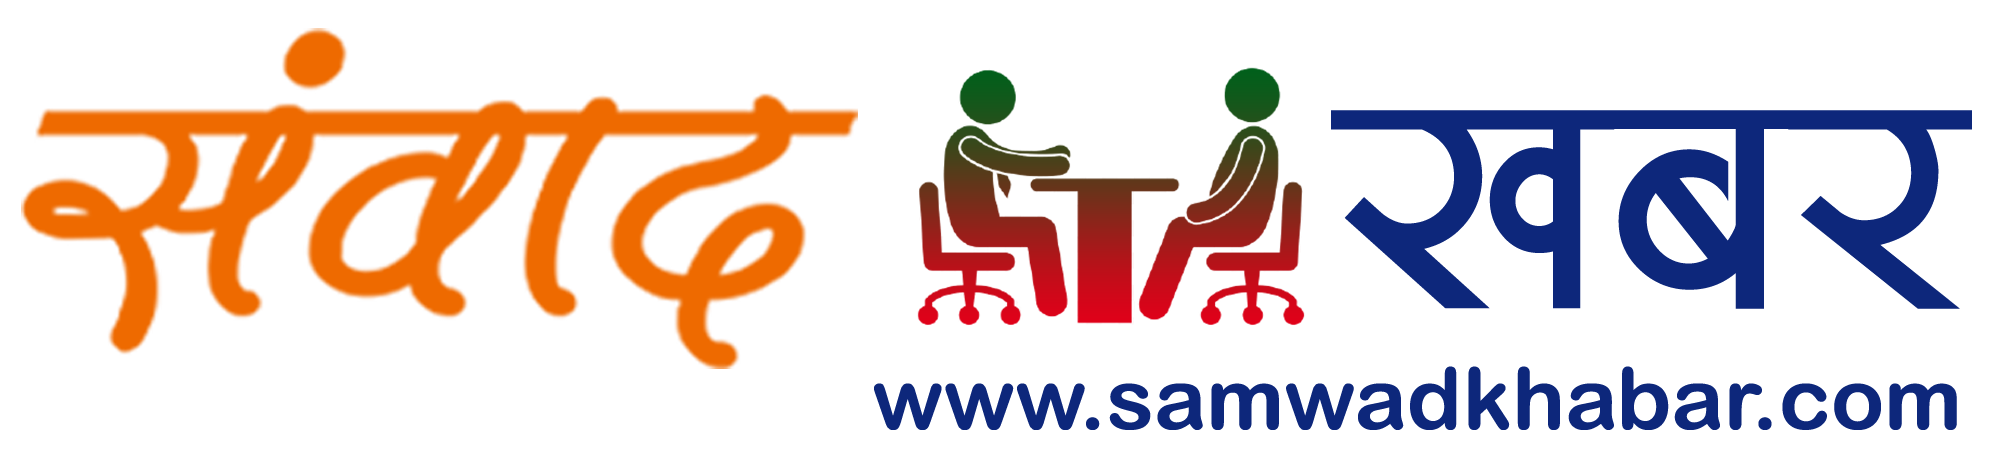 SamwadKhabar logo